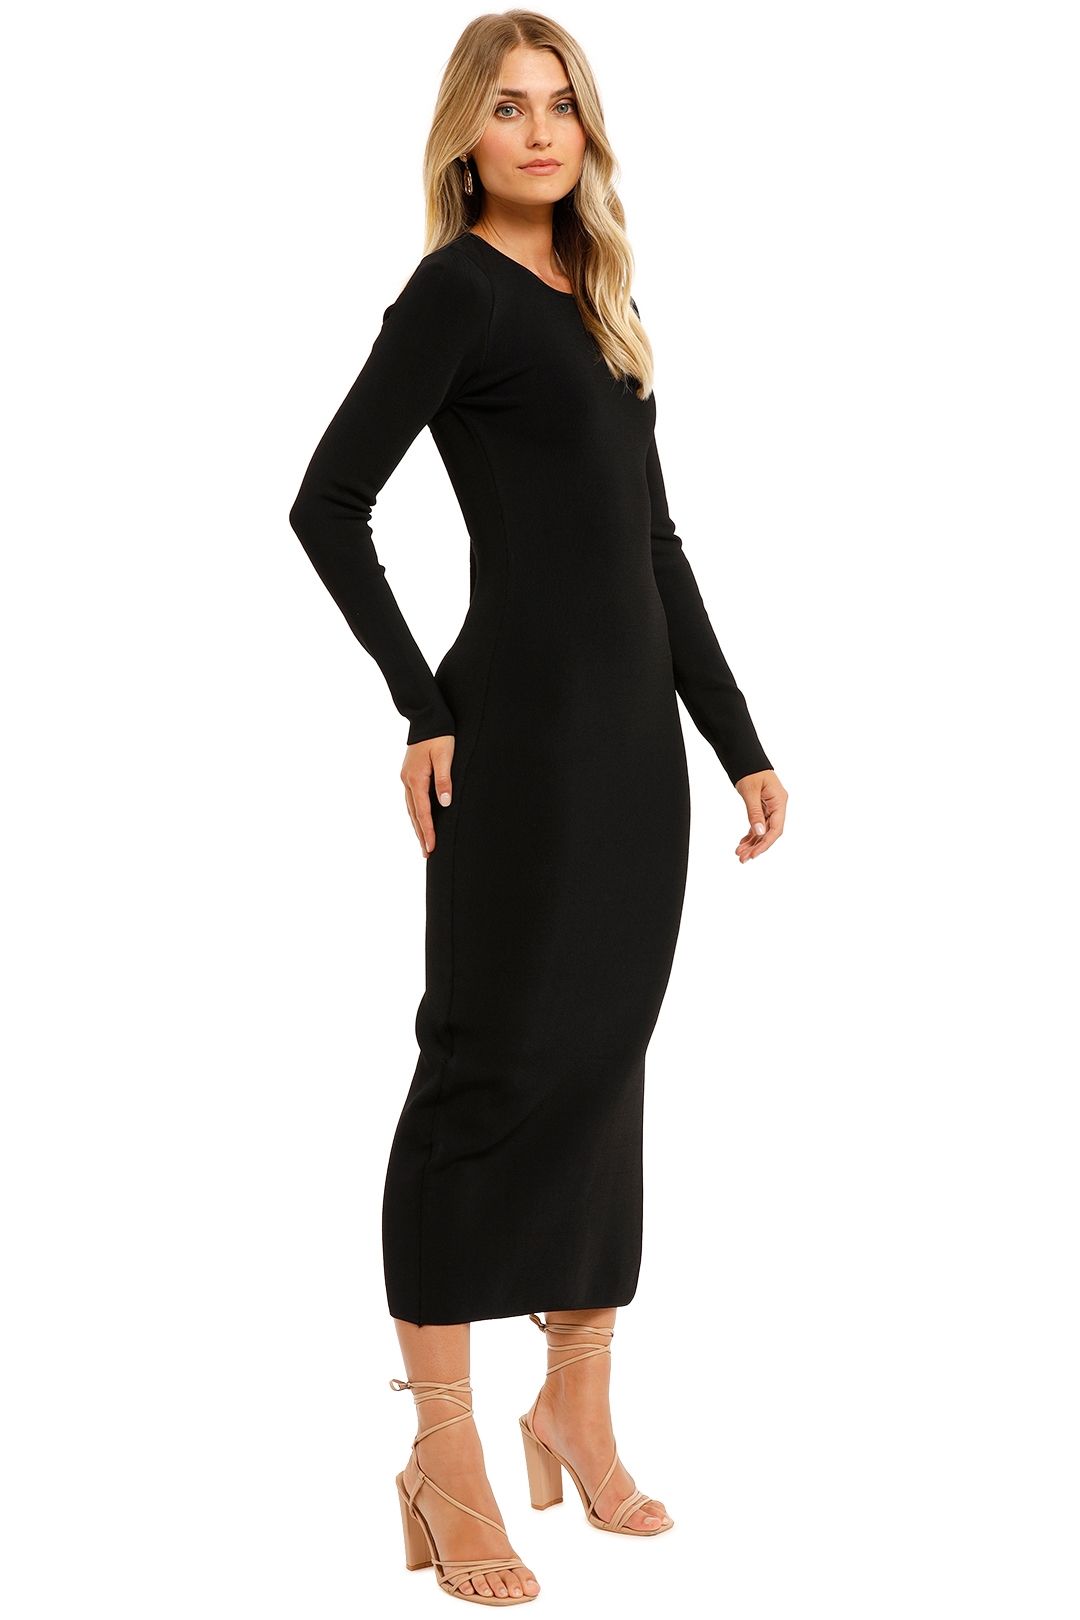 Shona Joy Long Sleeve Backless Midi Dress Black Midi Length